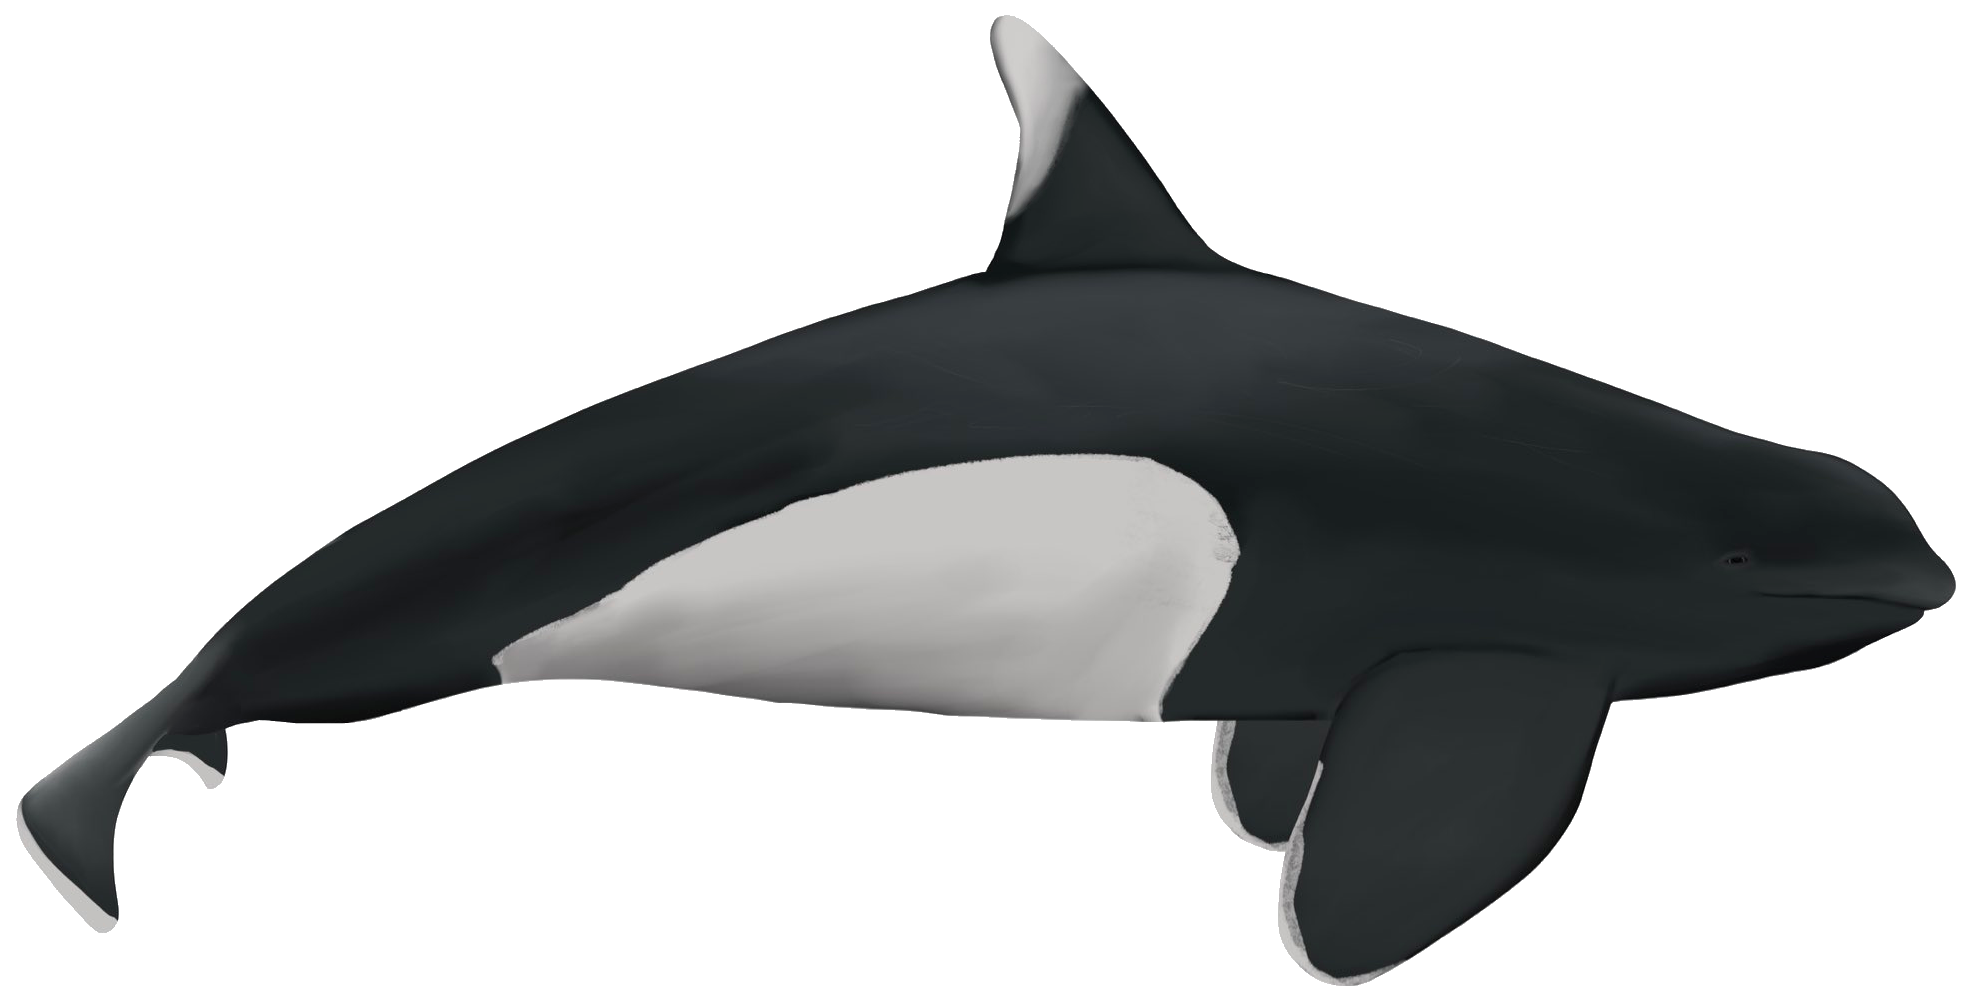 dwarf killer whale